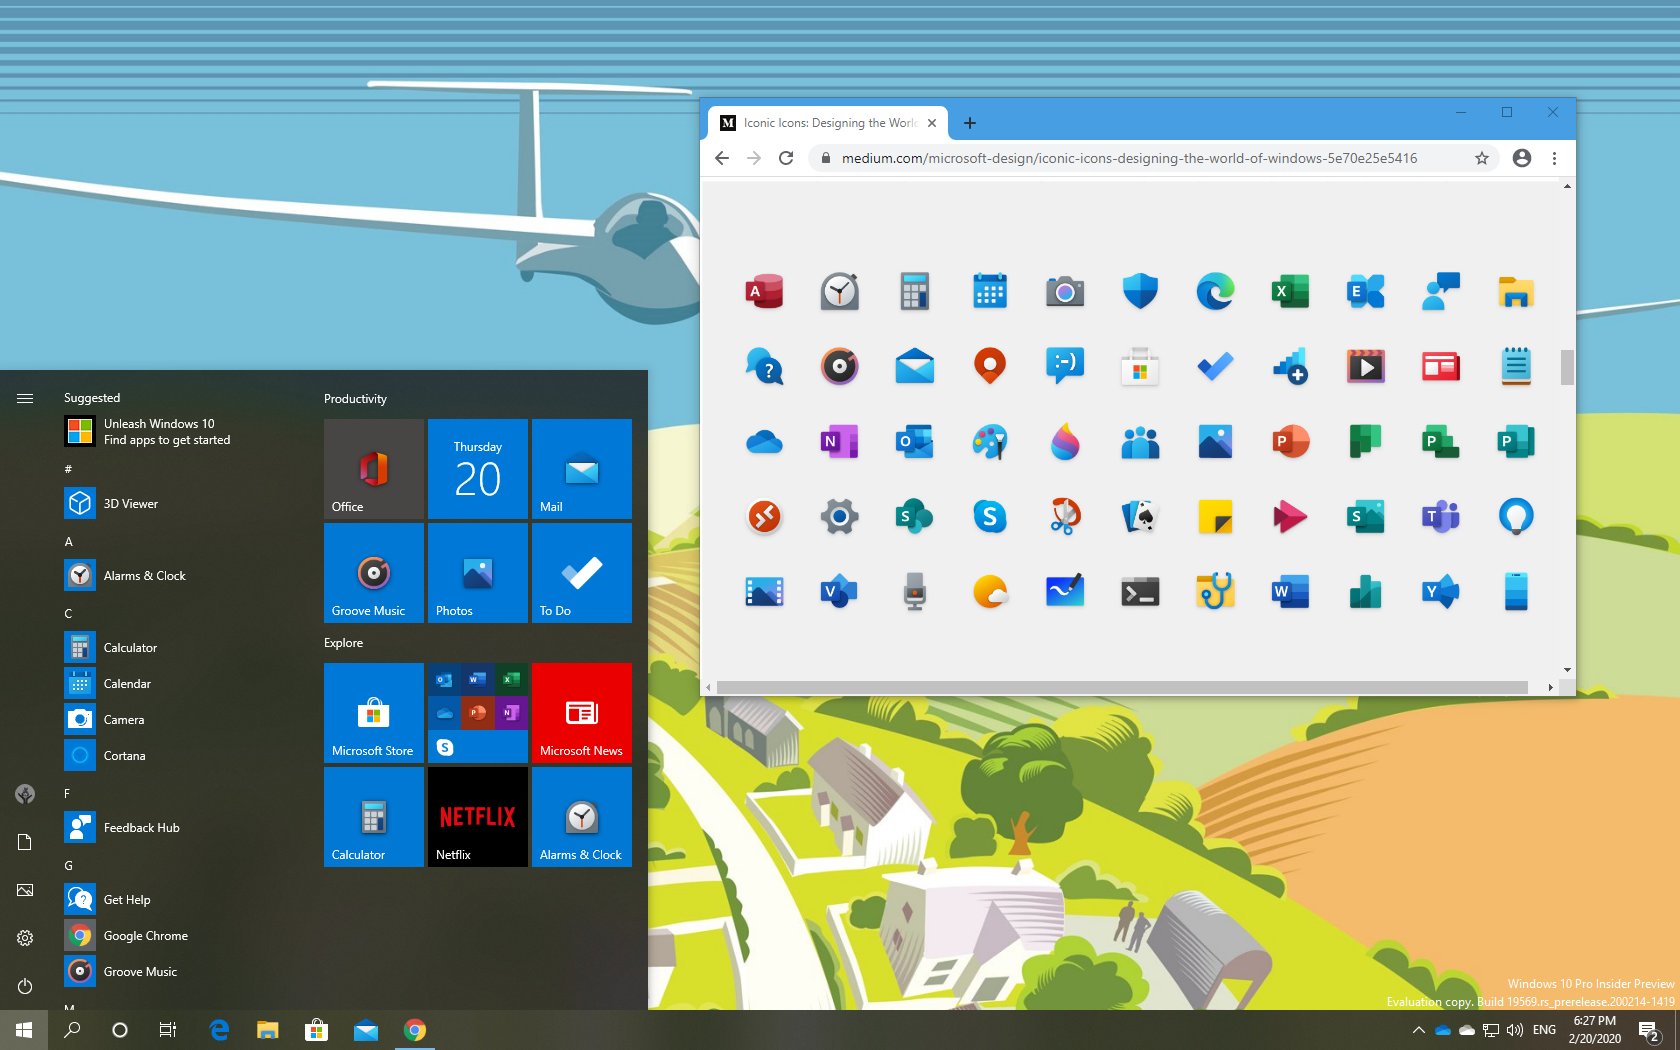 windows 10 icon packs